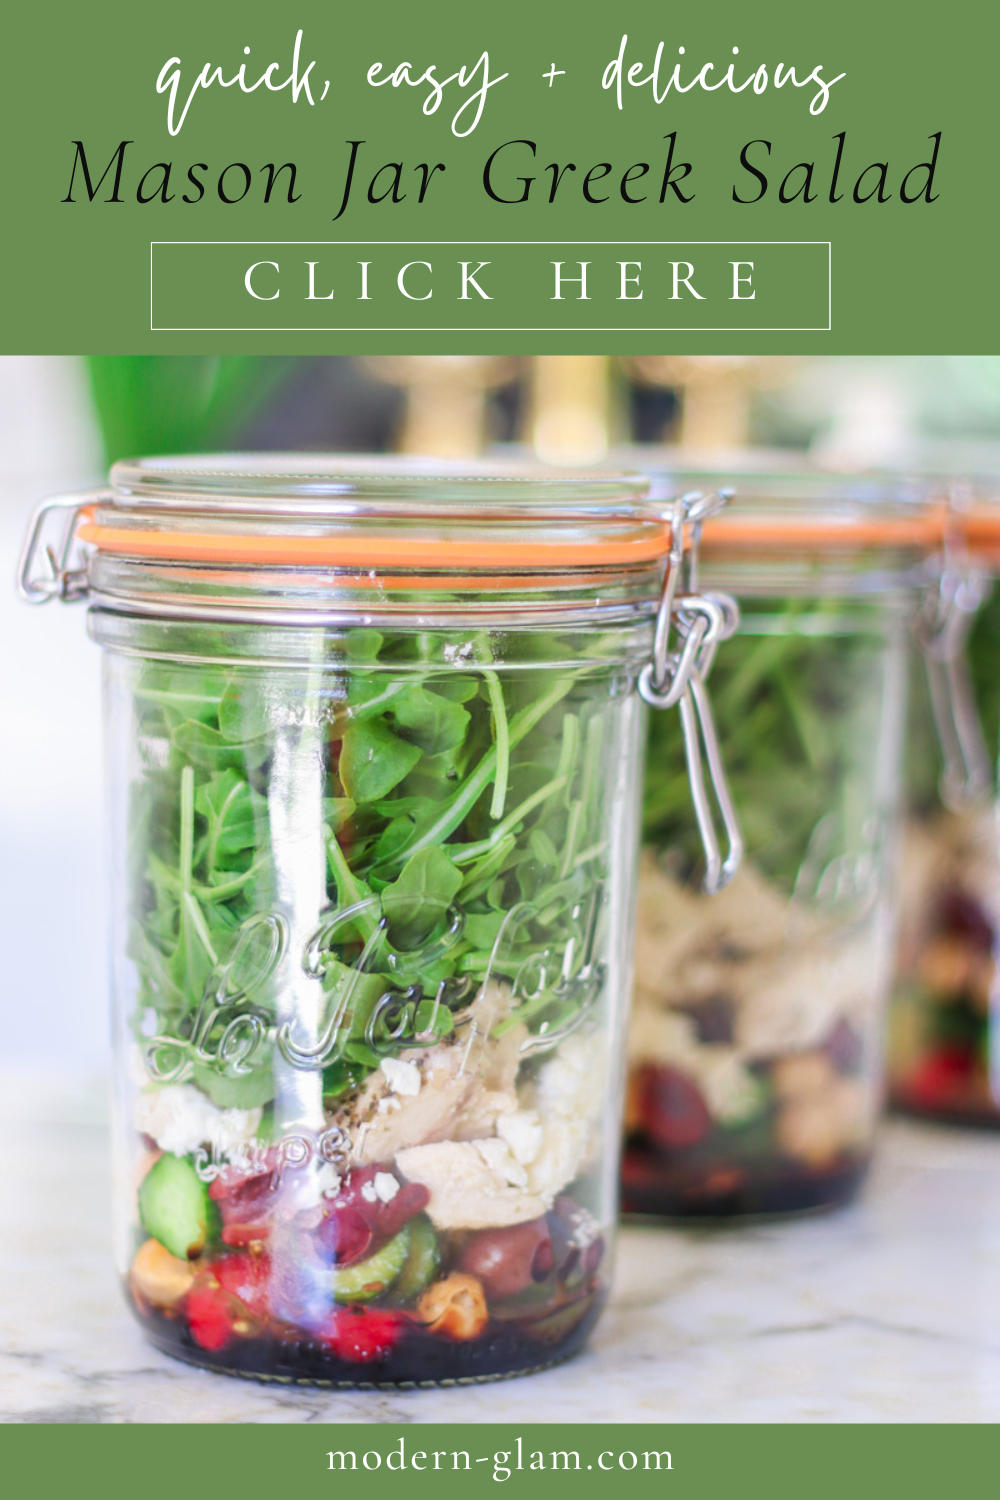 This Mason Jar Greek Salad Recipe Is So Good! - Modern Glam